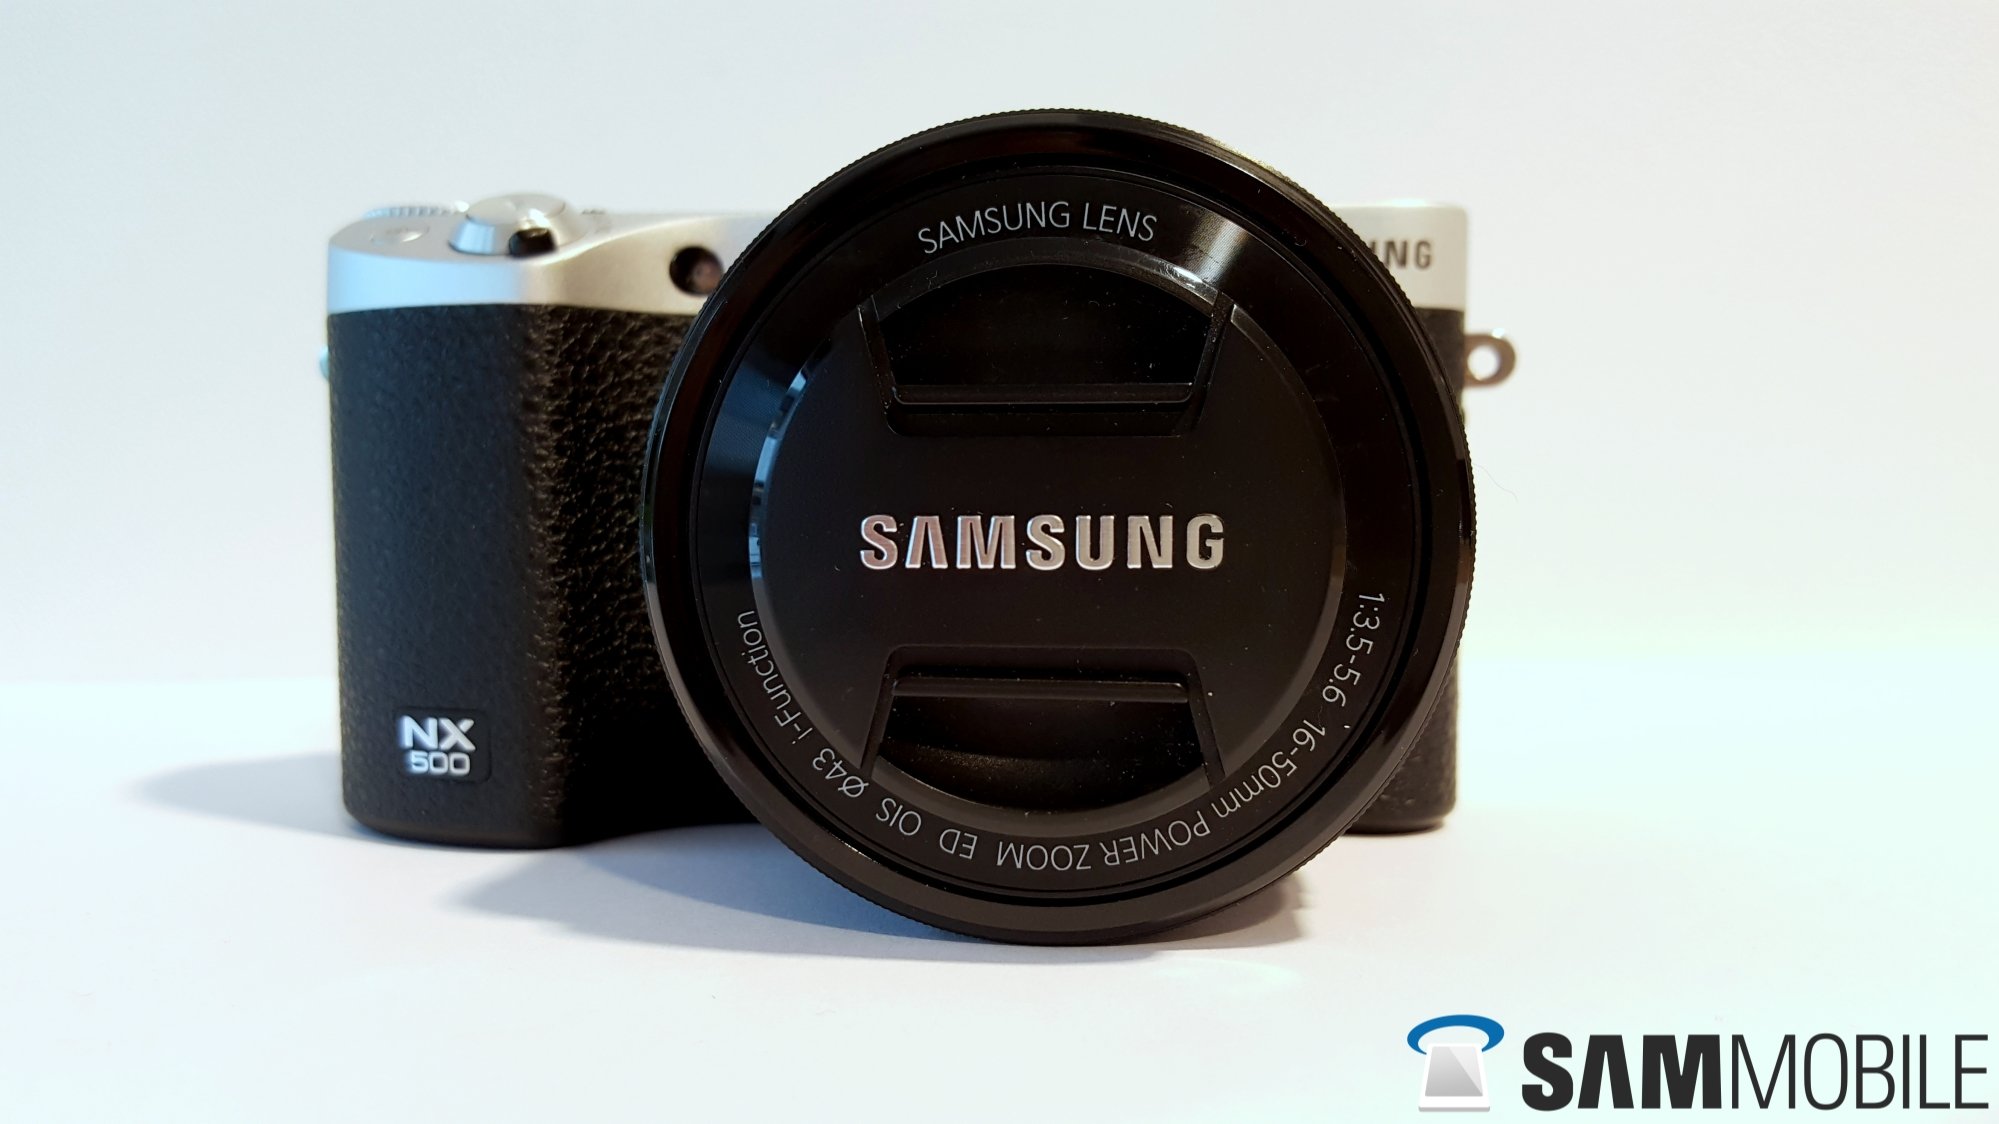 kalf Mededogen ontwikkelen Samsung NX500 review: the best affordable system camera - SamMobile -  SamMobile